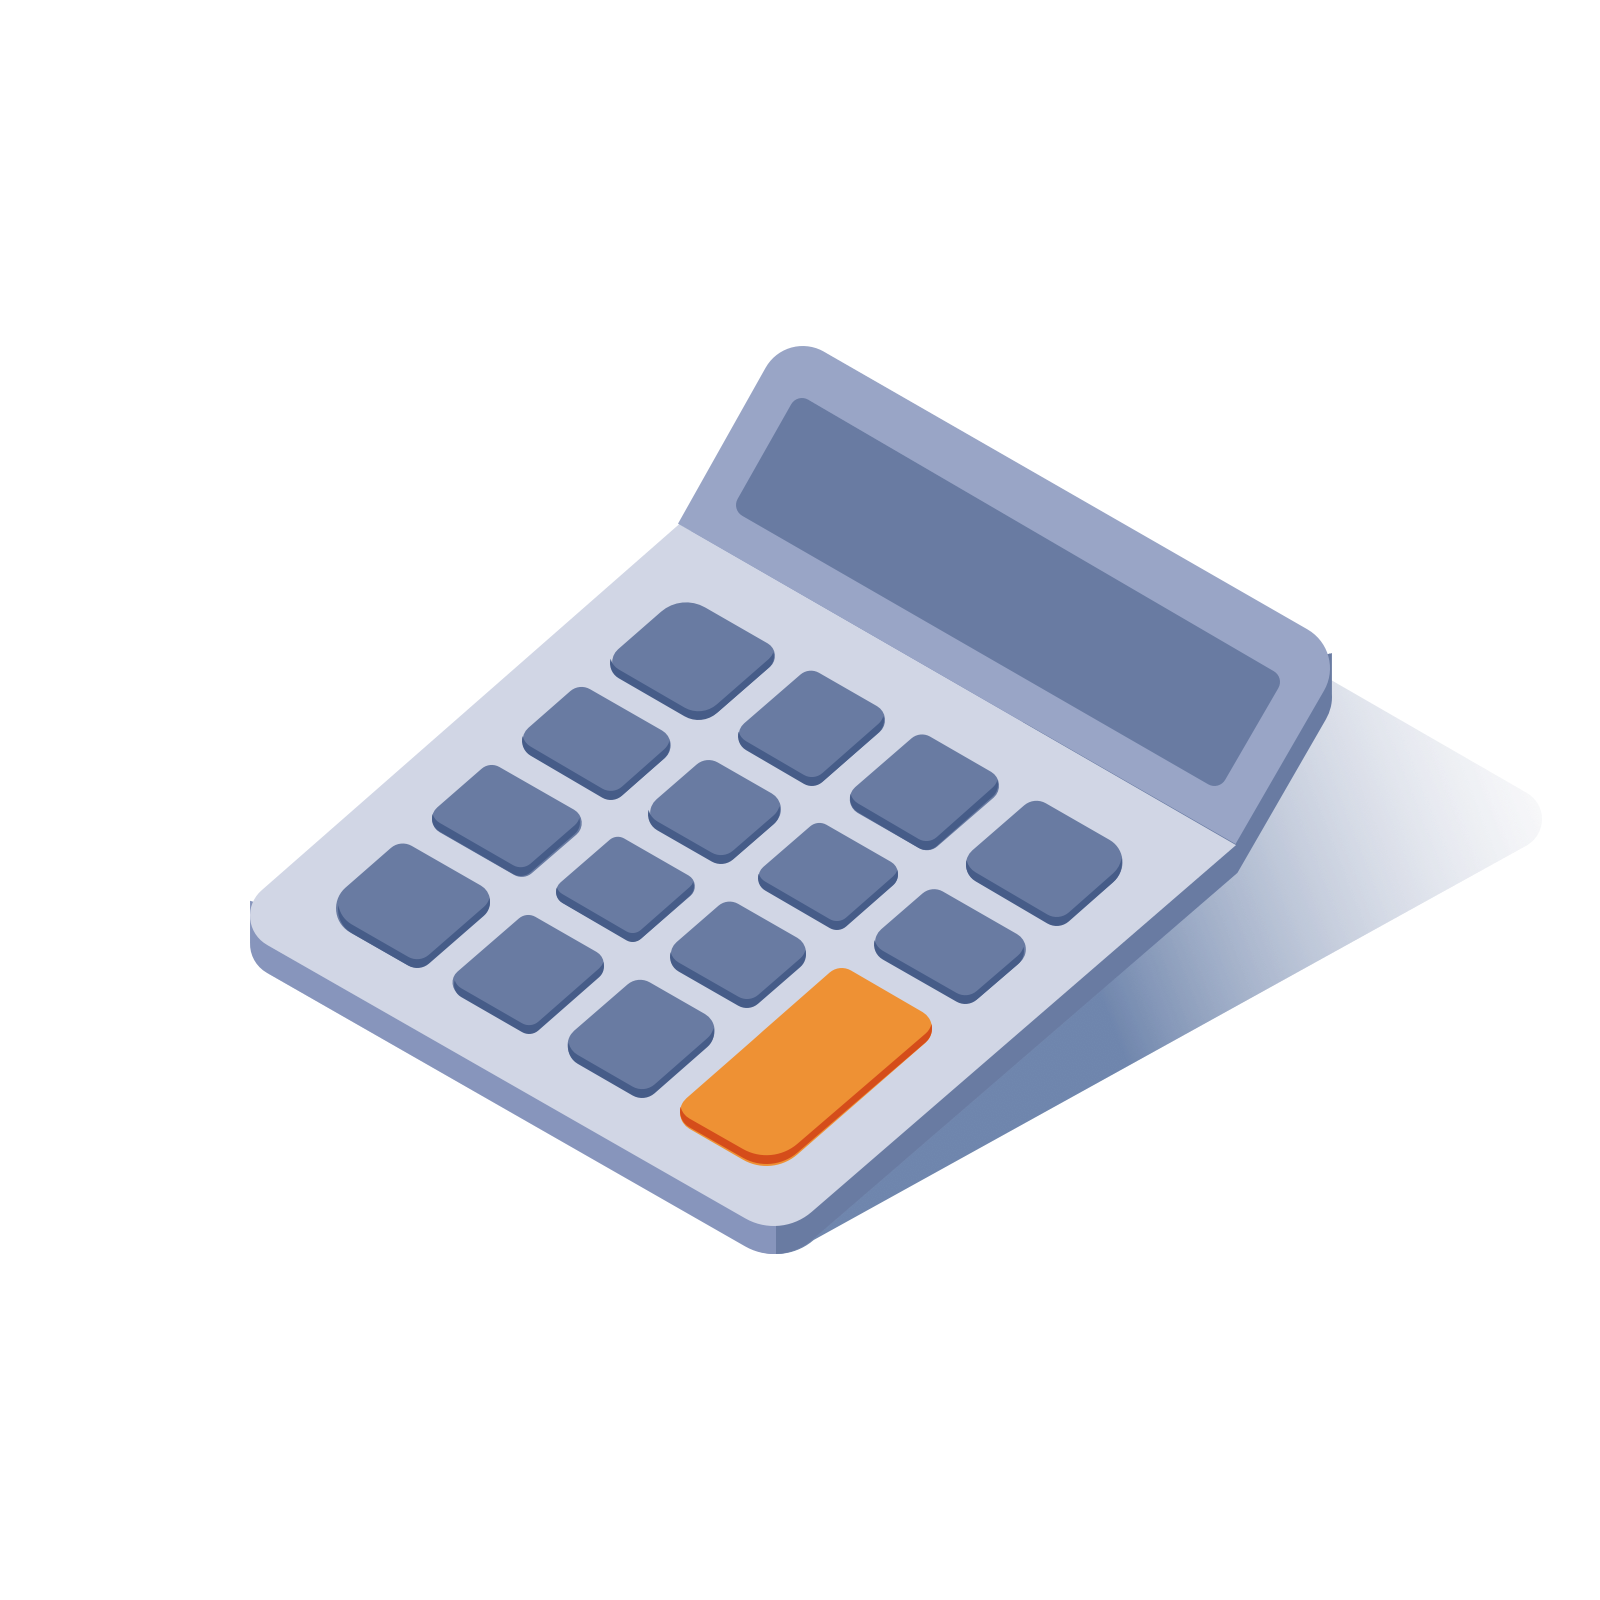 Accounting Calculator